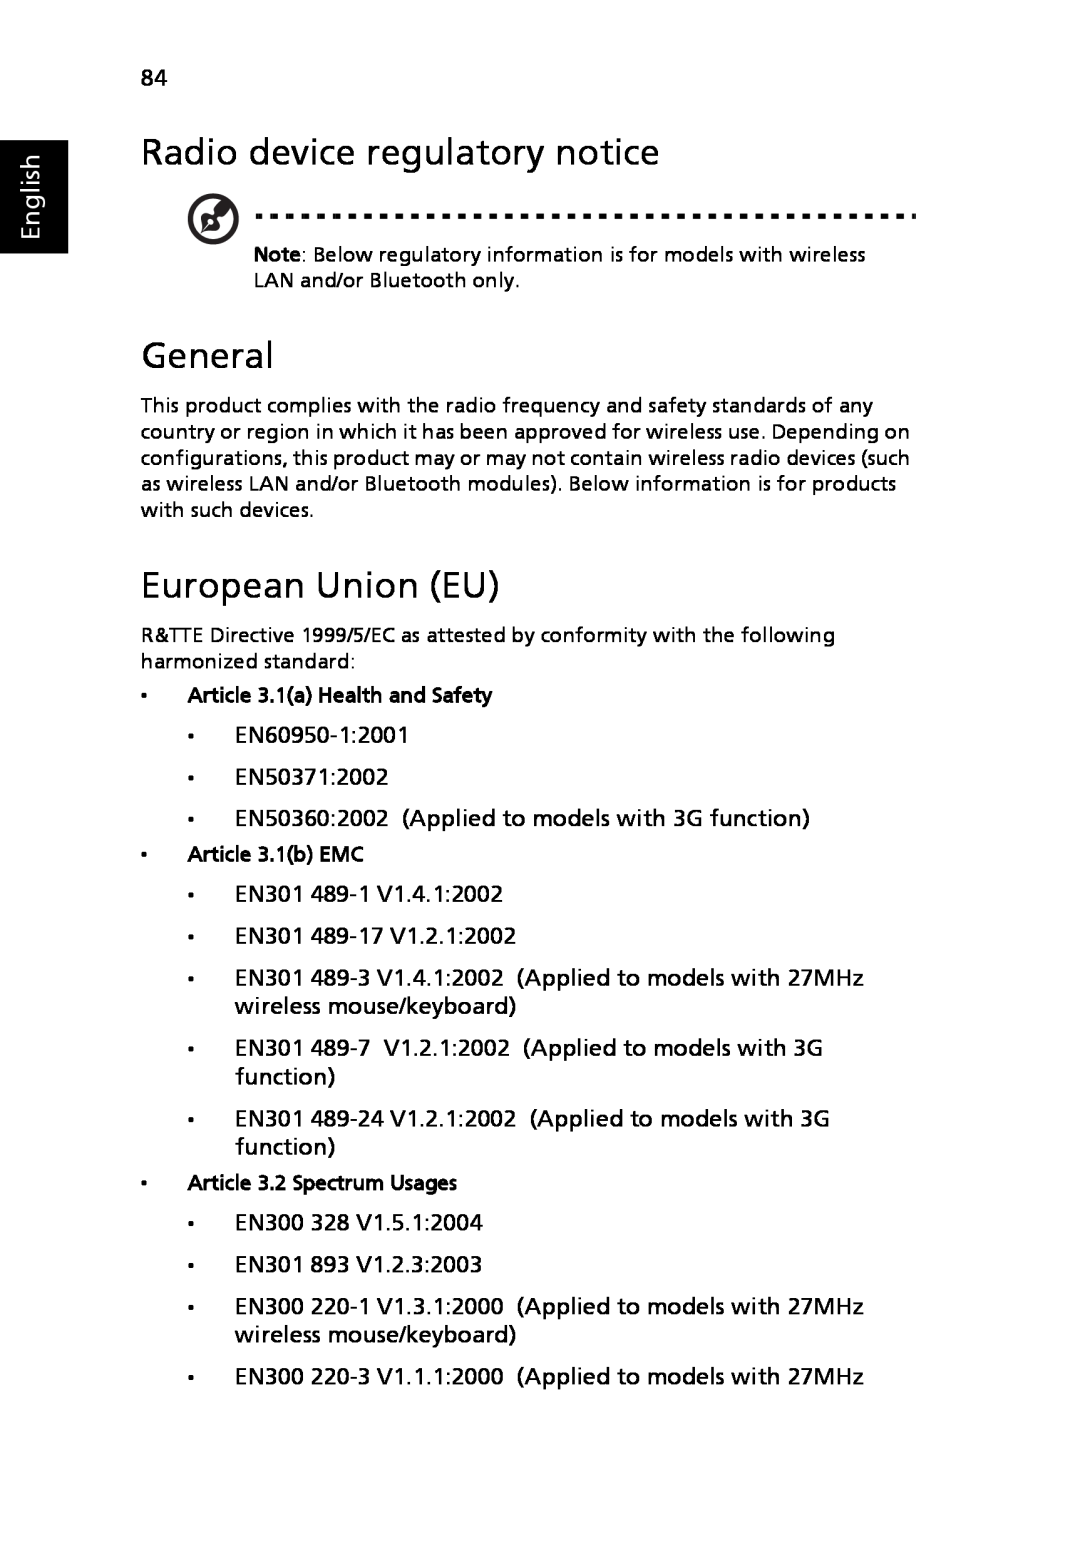 Acer 4920, MS2219 manual Radio device regulatory notice, General, European Union EU, English 